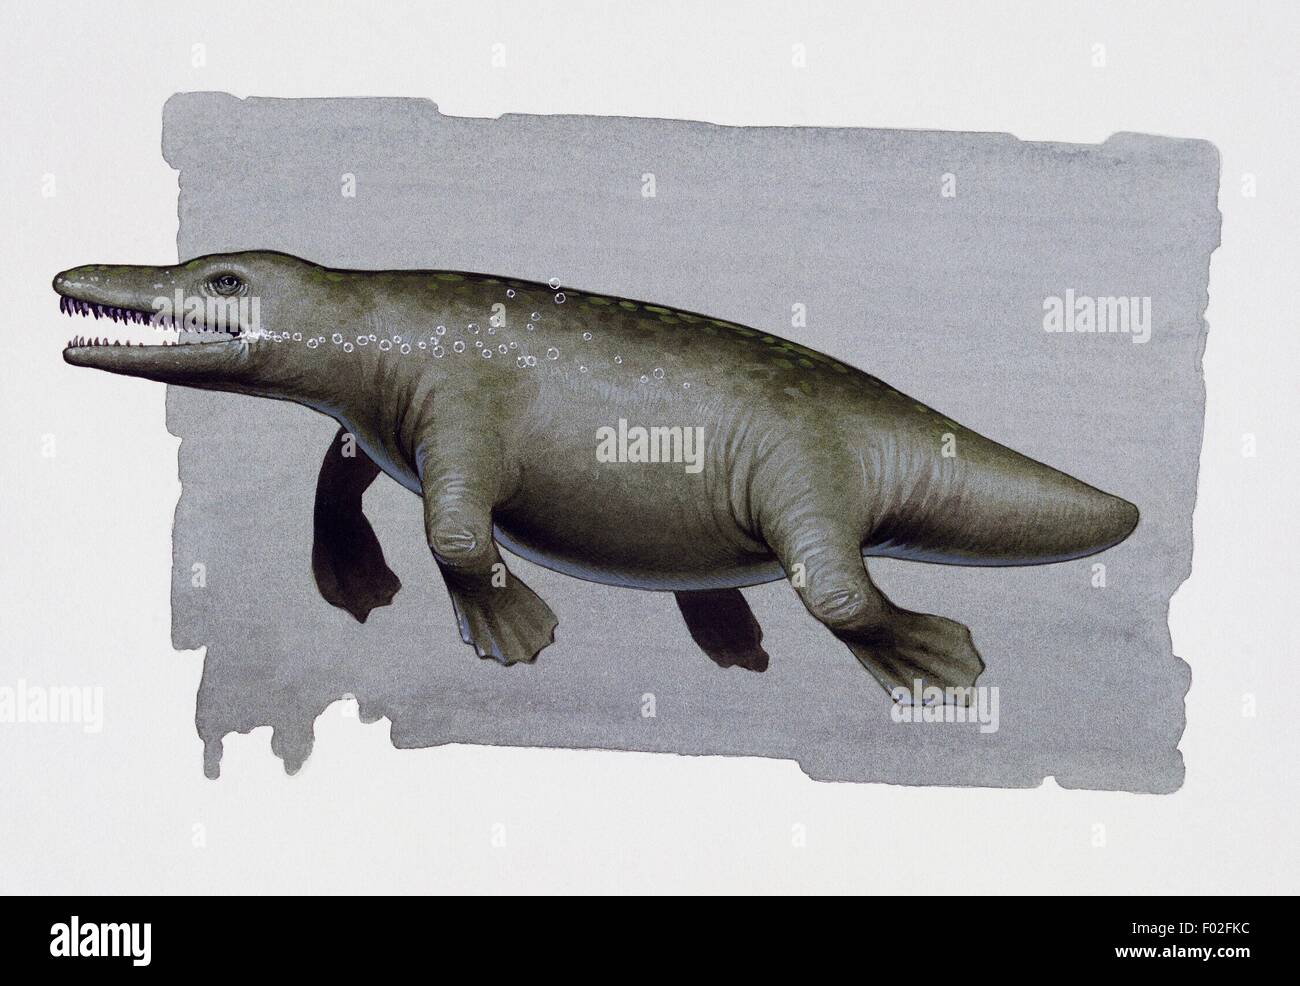 Ambulocetus natans, Protocetidae, Eocene. Artwork by Kevin Lyles. Stock Photo